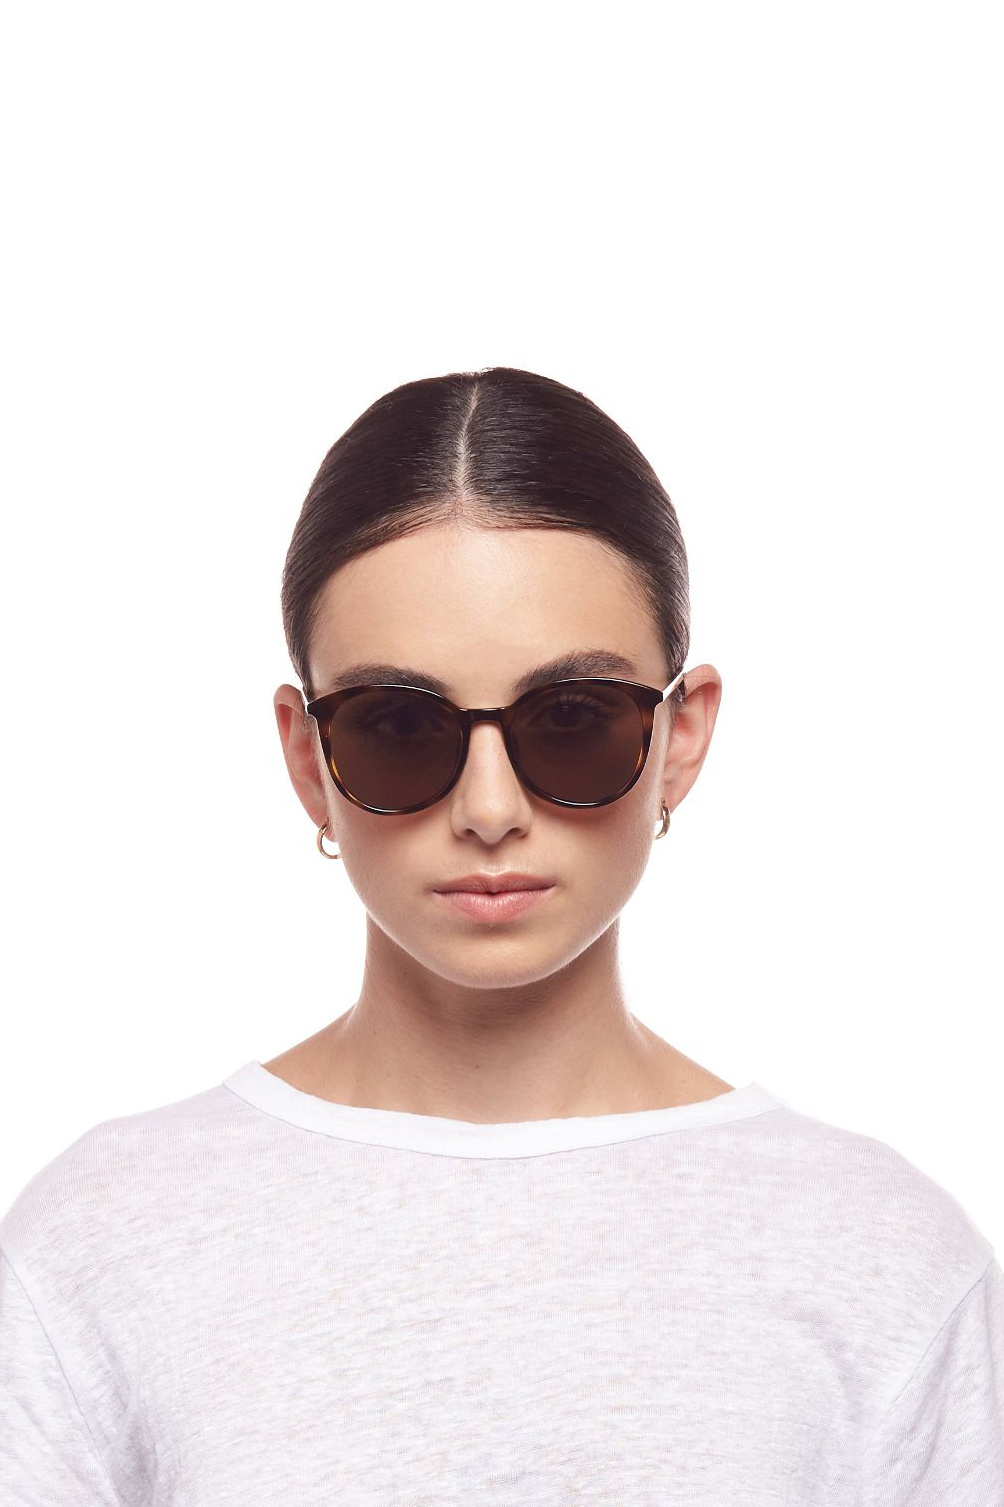 Le Danzing Sunglasses - Tort / Gold Polarized-2